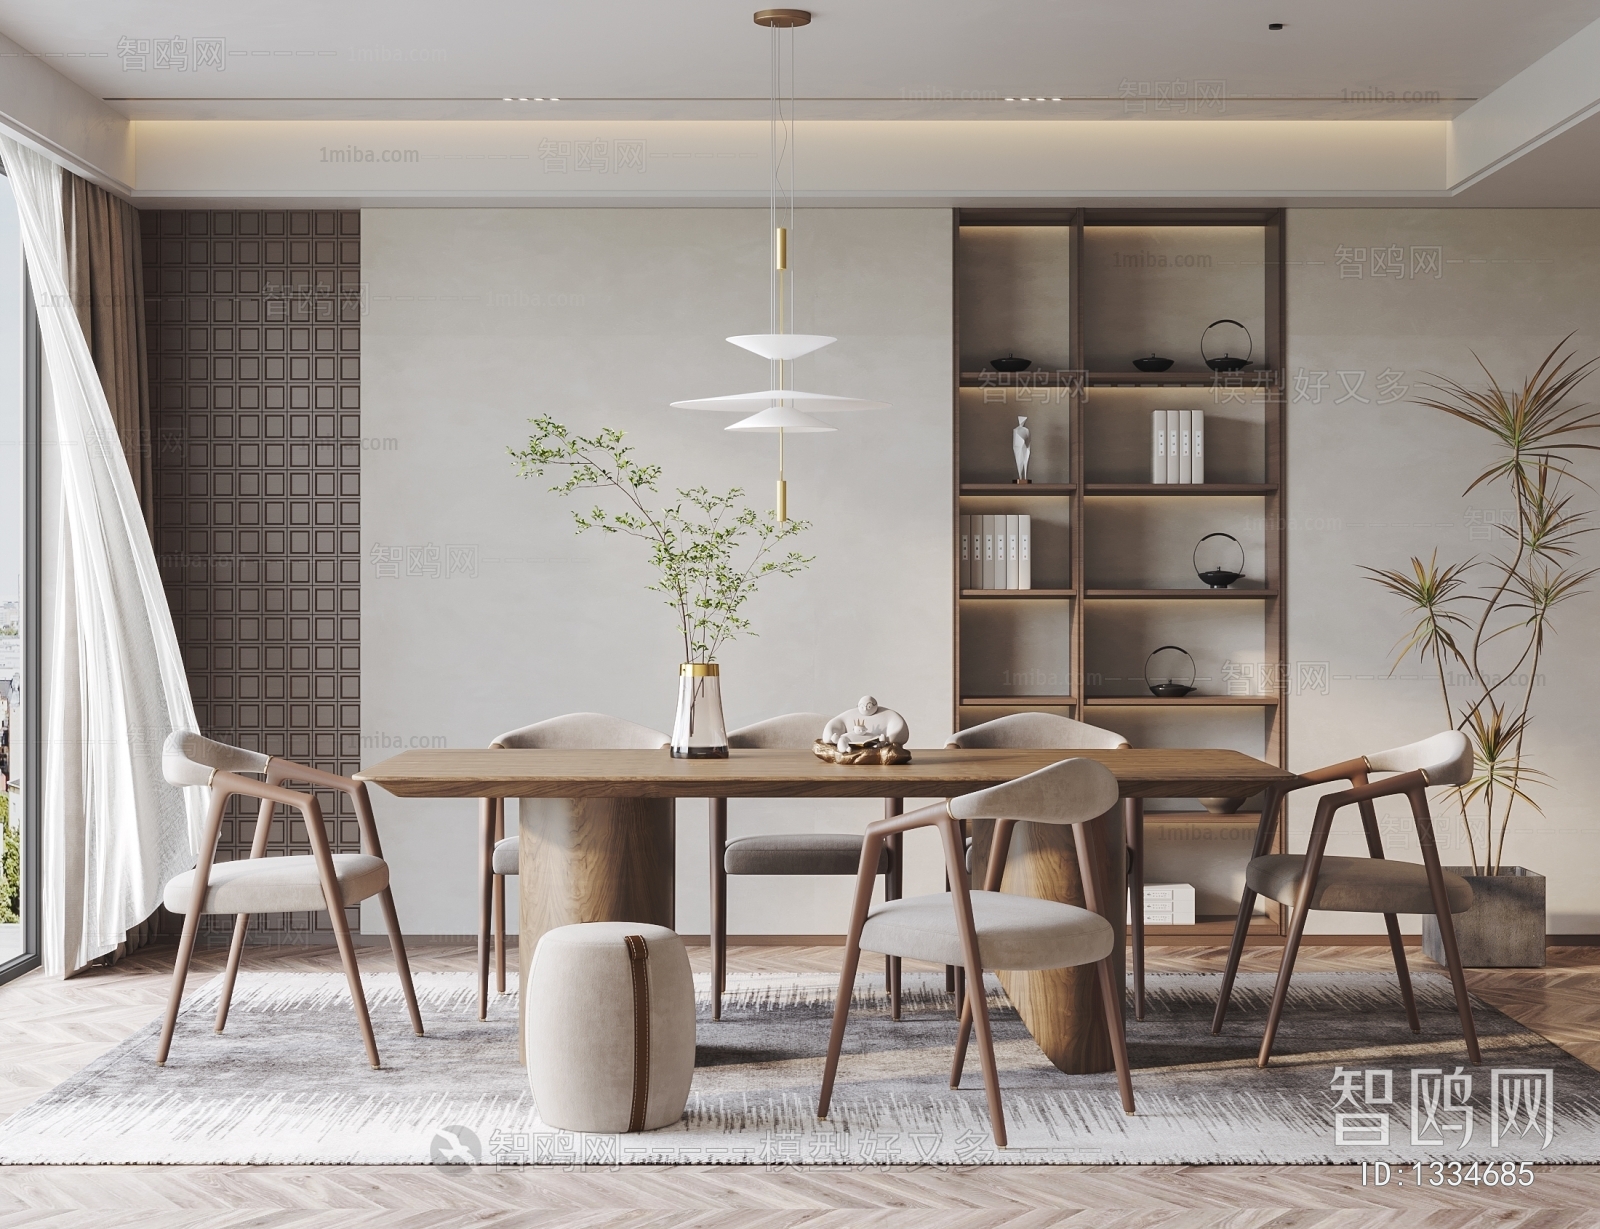 New Chinese Style Wabi-sabi Style Dining Room